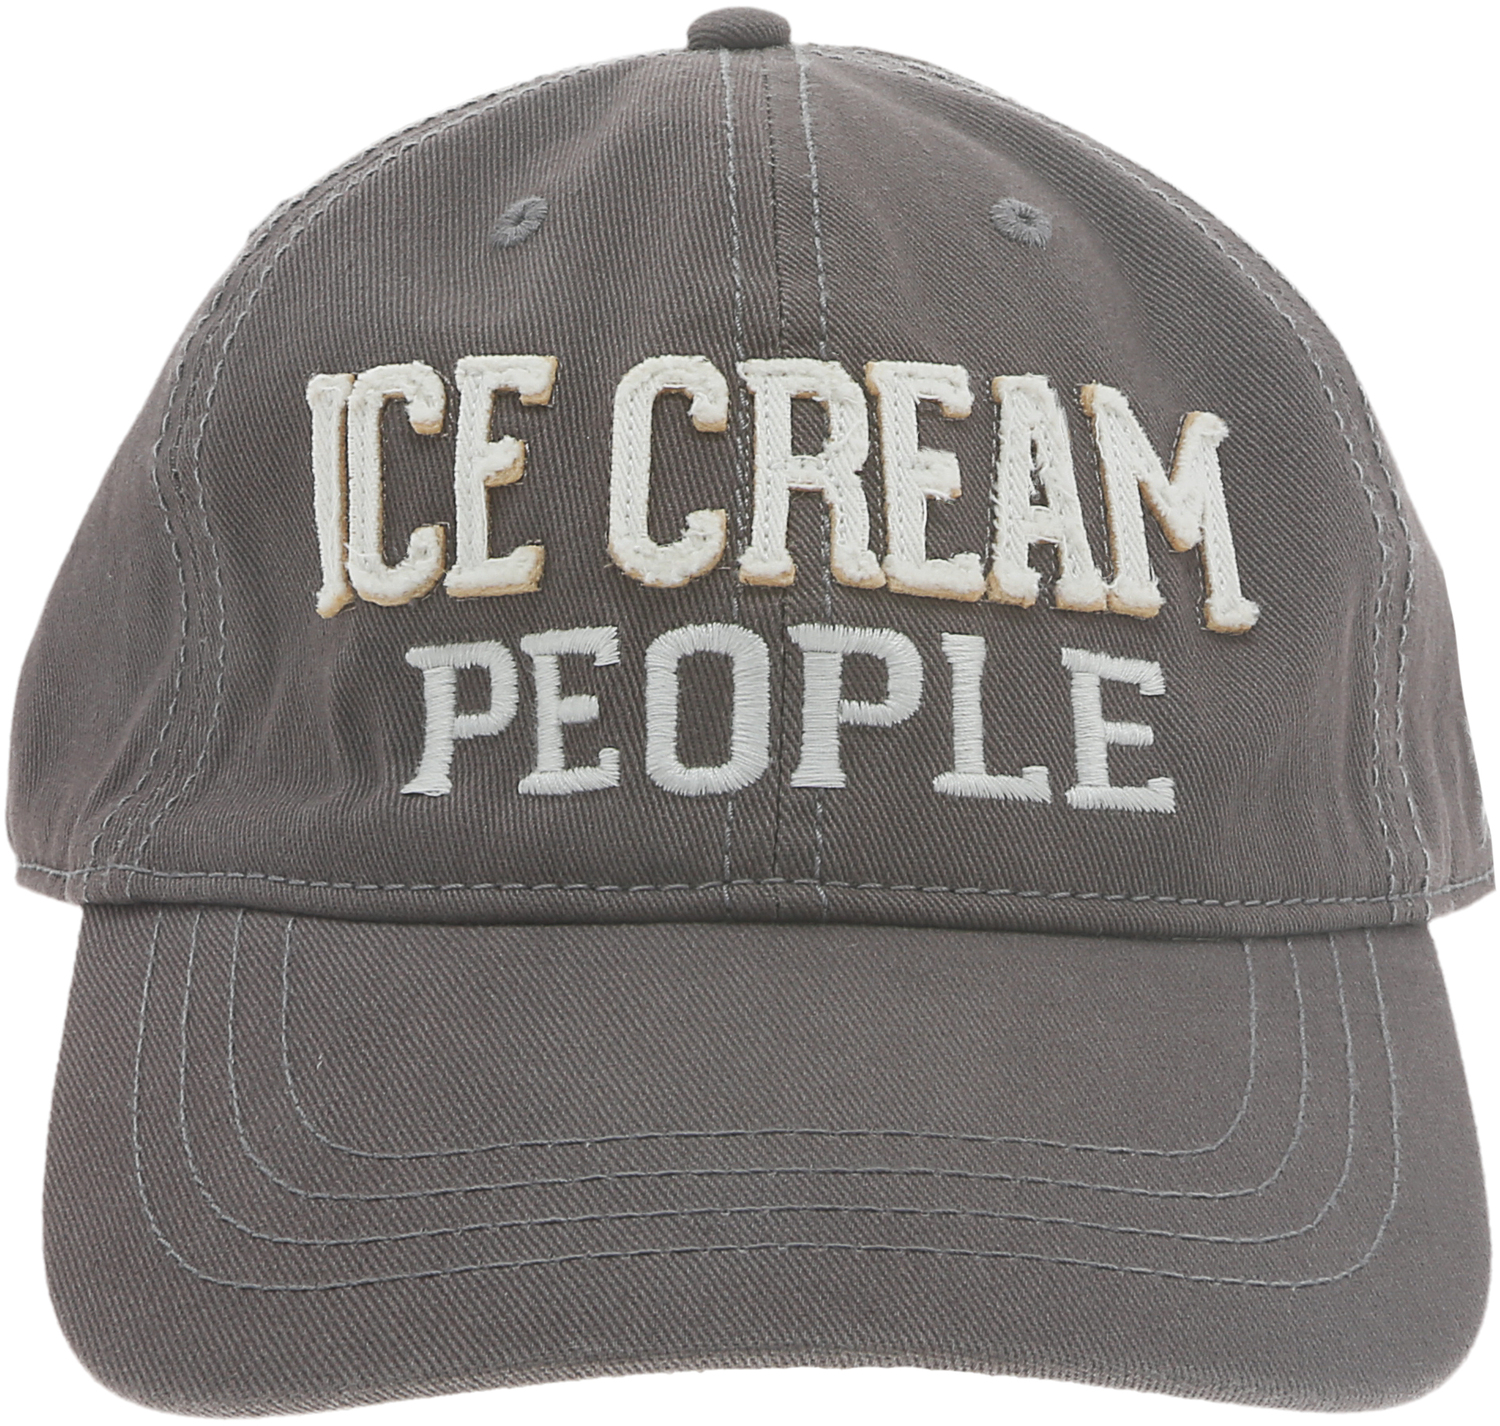 Ice Cream People by We People - Ice Cream People - Dark Gray Adjustable Hat